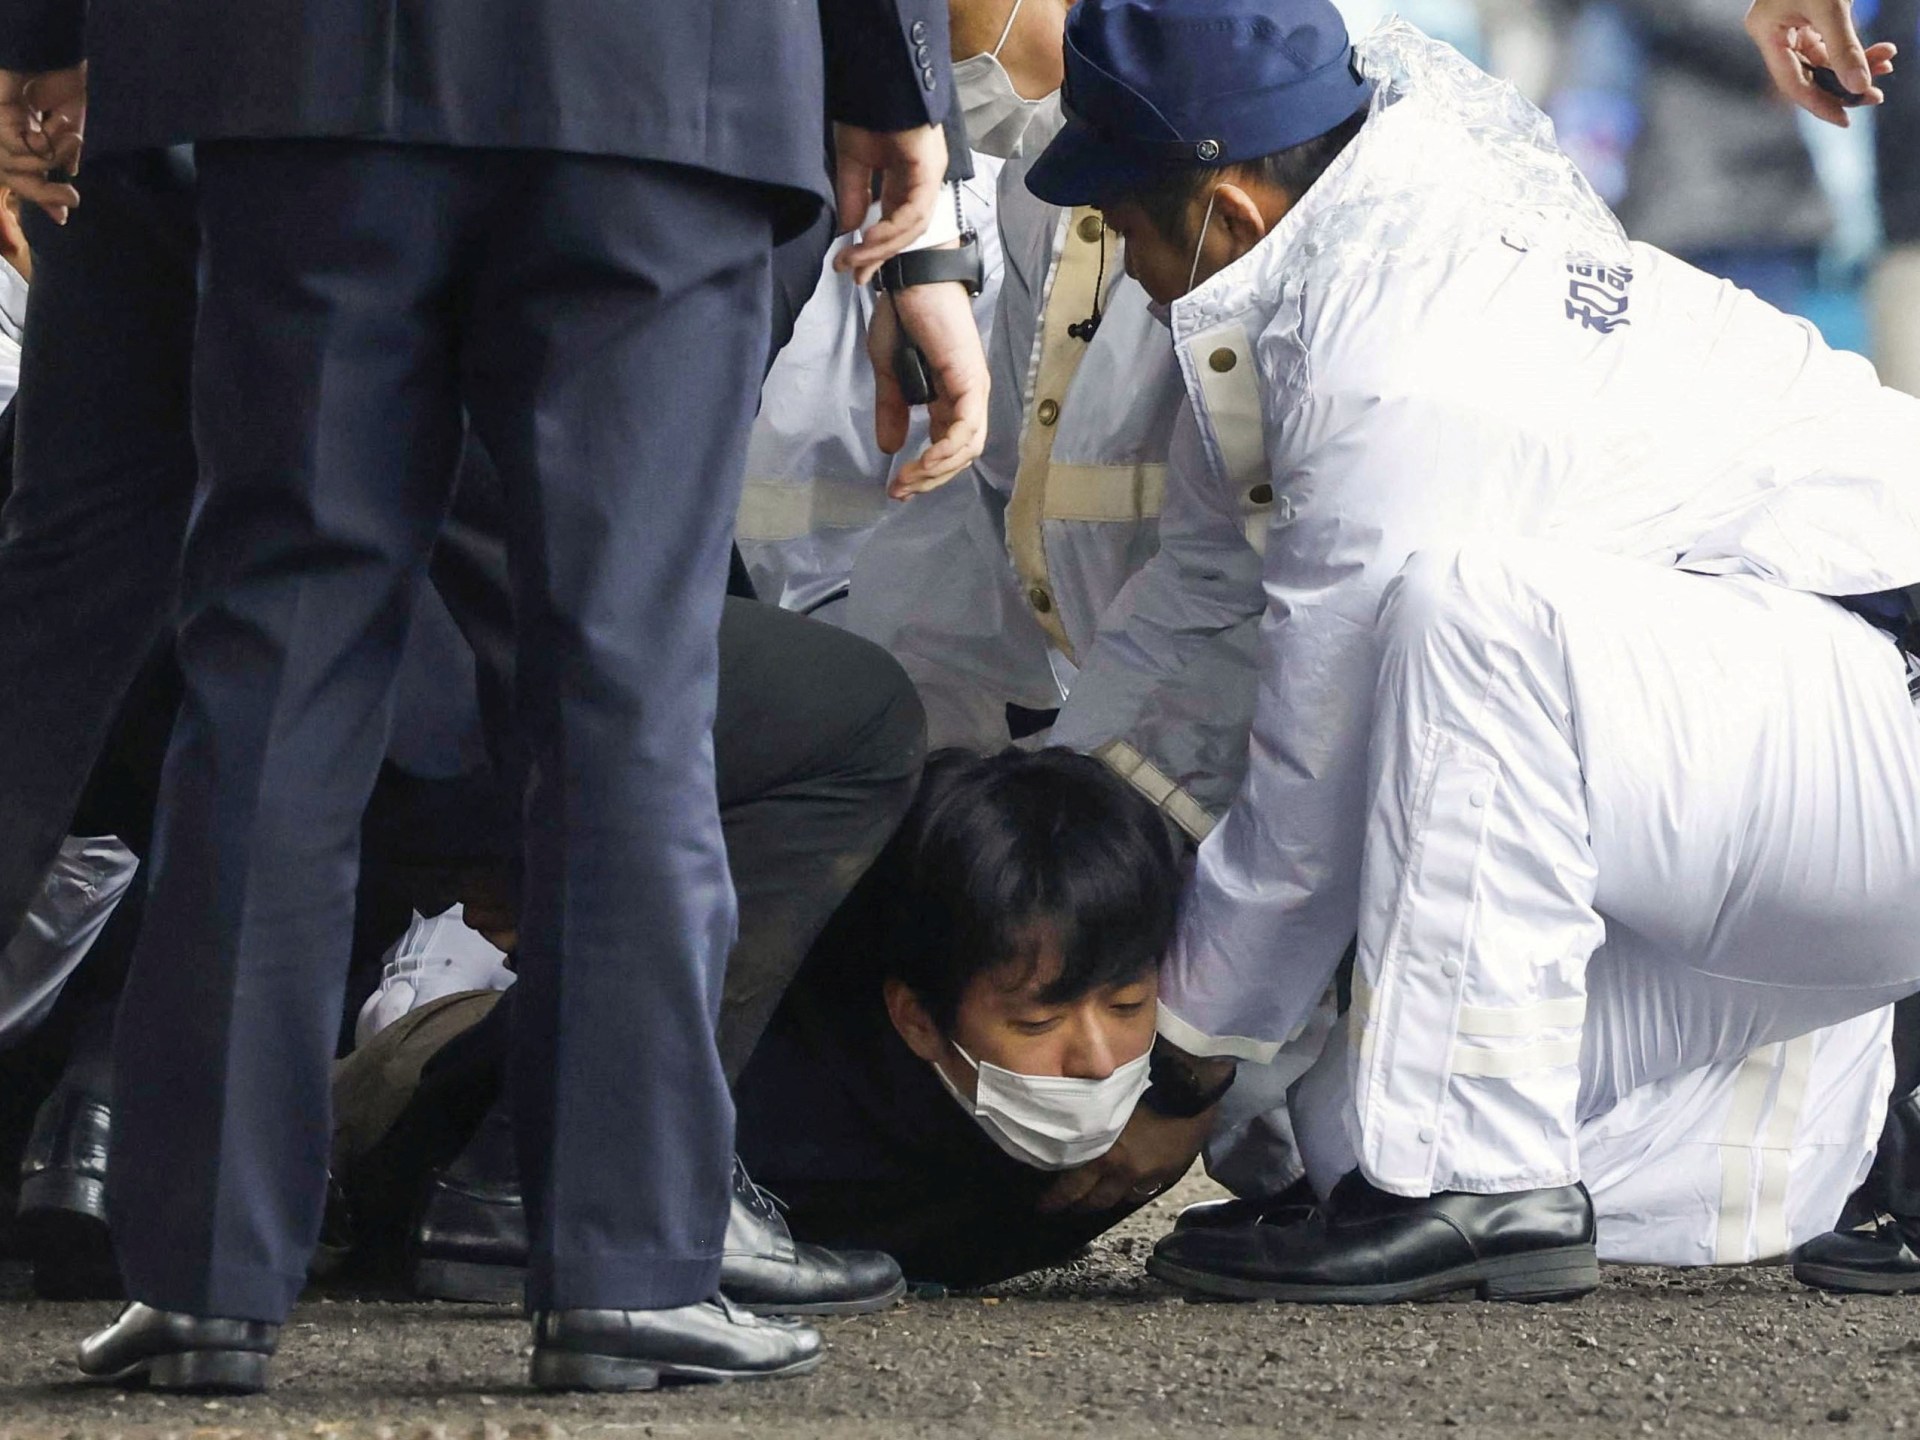 Perdana Menteri Jepang tidak terluka setelah ‘bom asap’ di acara kampanye |  Berita Politik